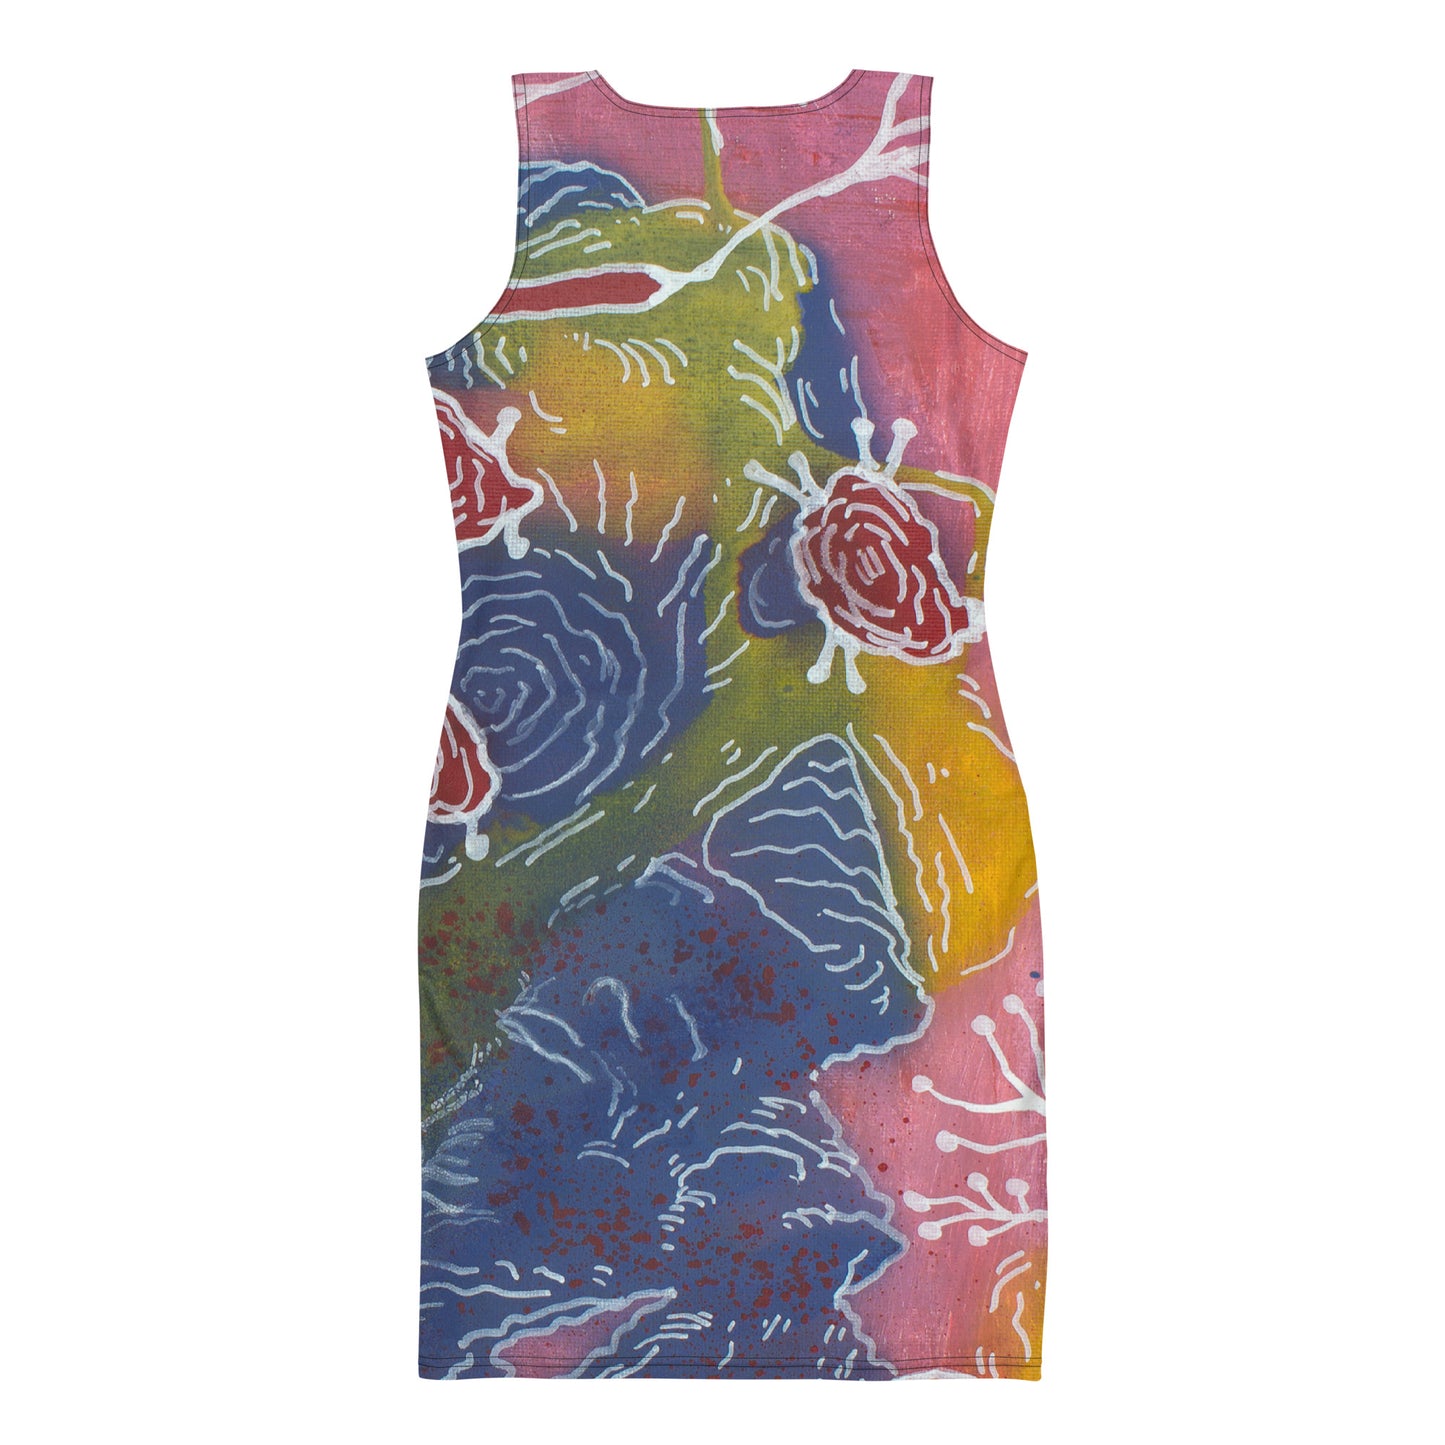 Lily Pad Dress by Jesse Valencia